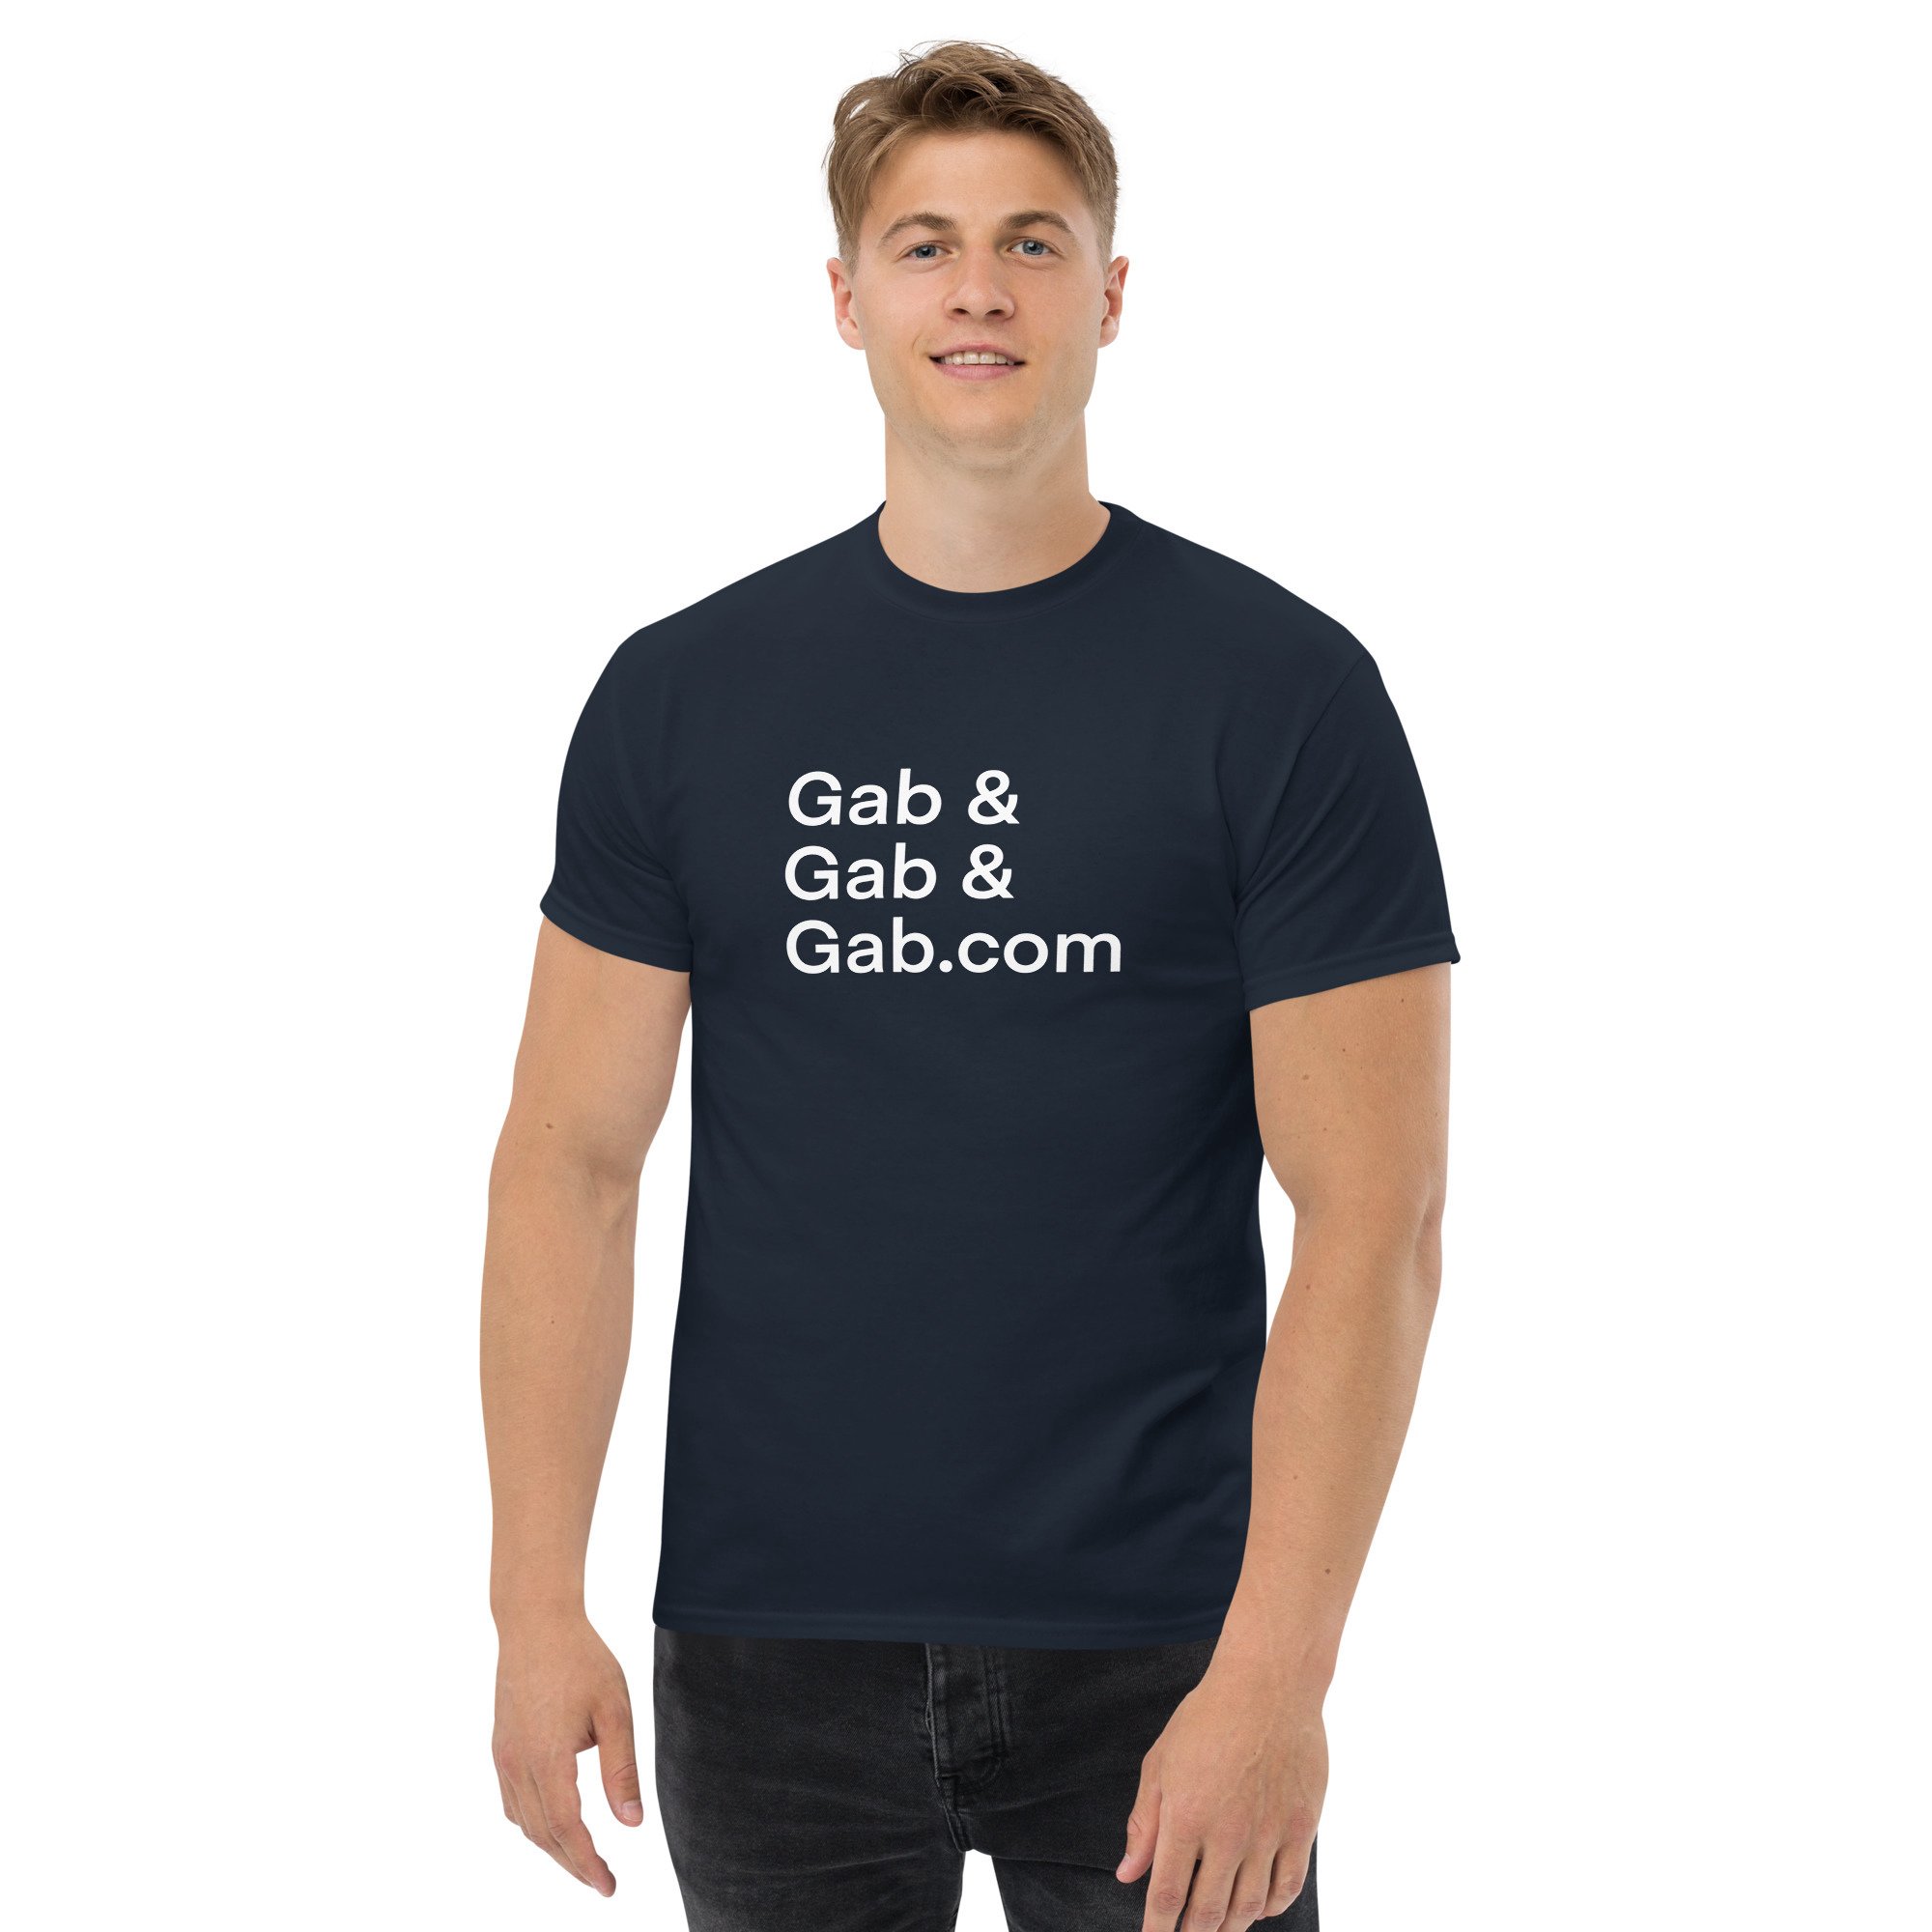 Gab, & Gab, & Gab.com T-Shirt - Navy / S